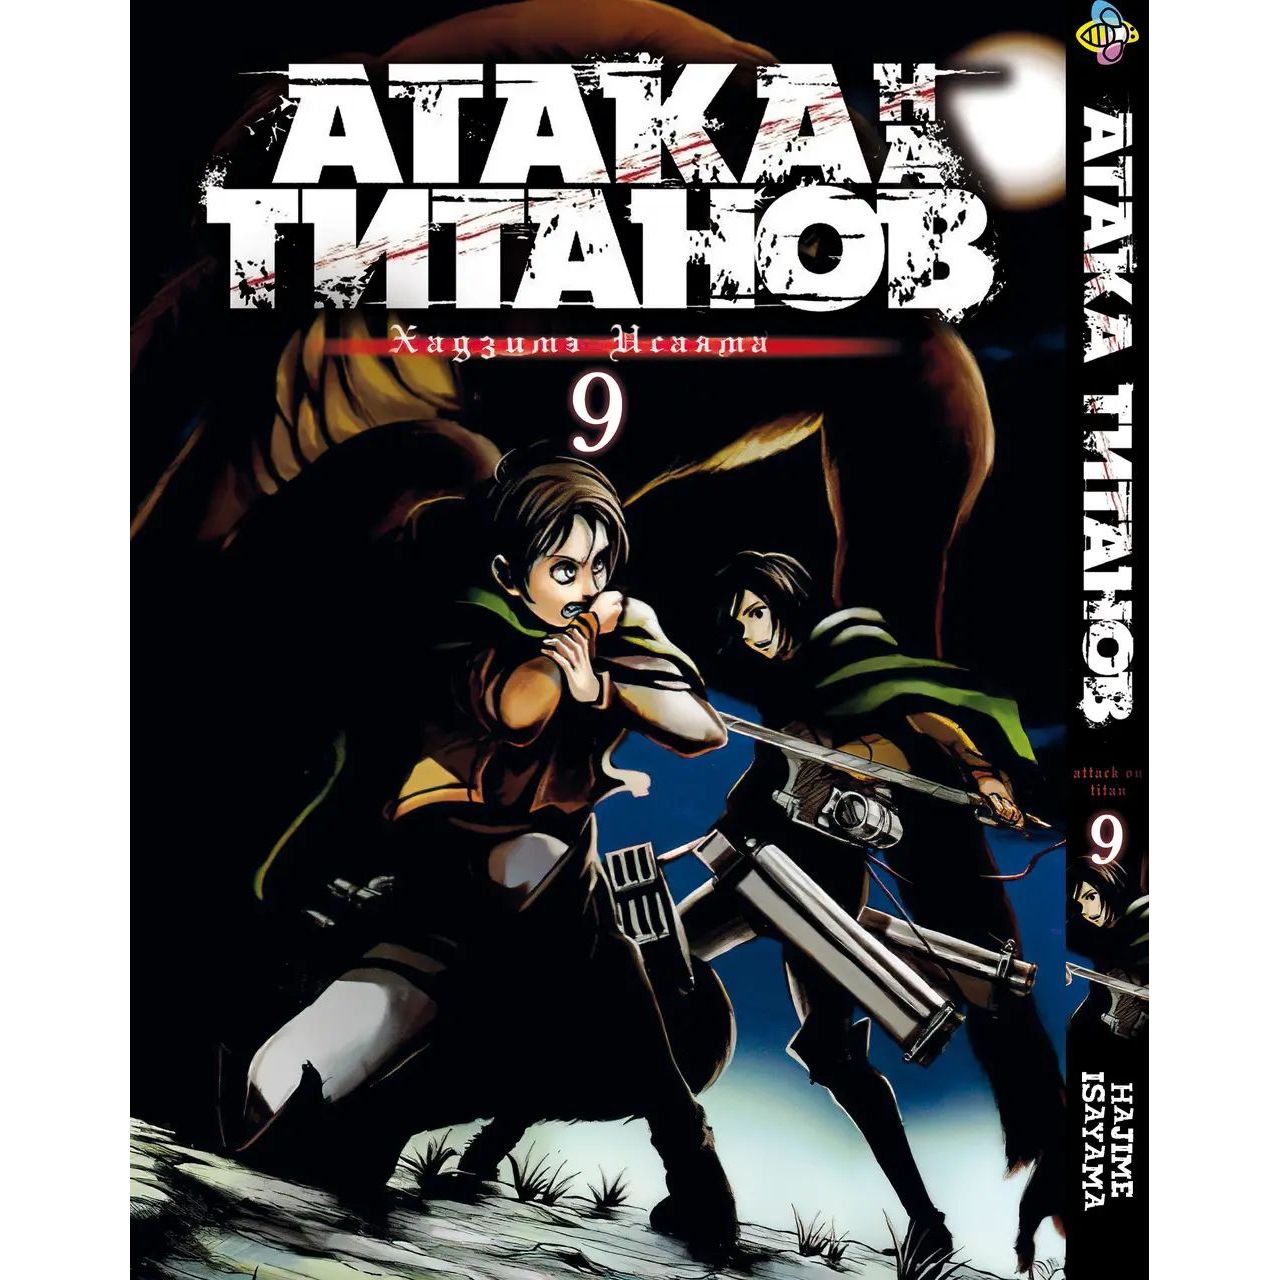 Комплект Манги Bee's Print Attack on Titan Атака Титанов BP ATSET 02 том 1-34 - Хадзимэ Исаяма (1754239195.0) - фото 9